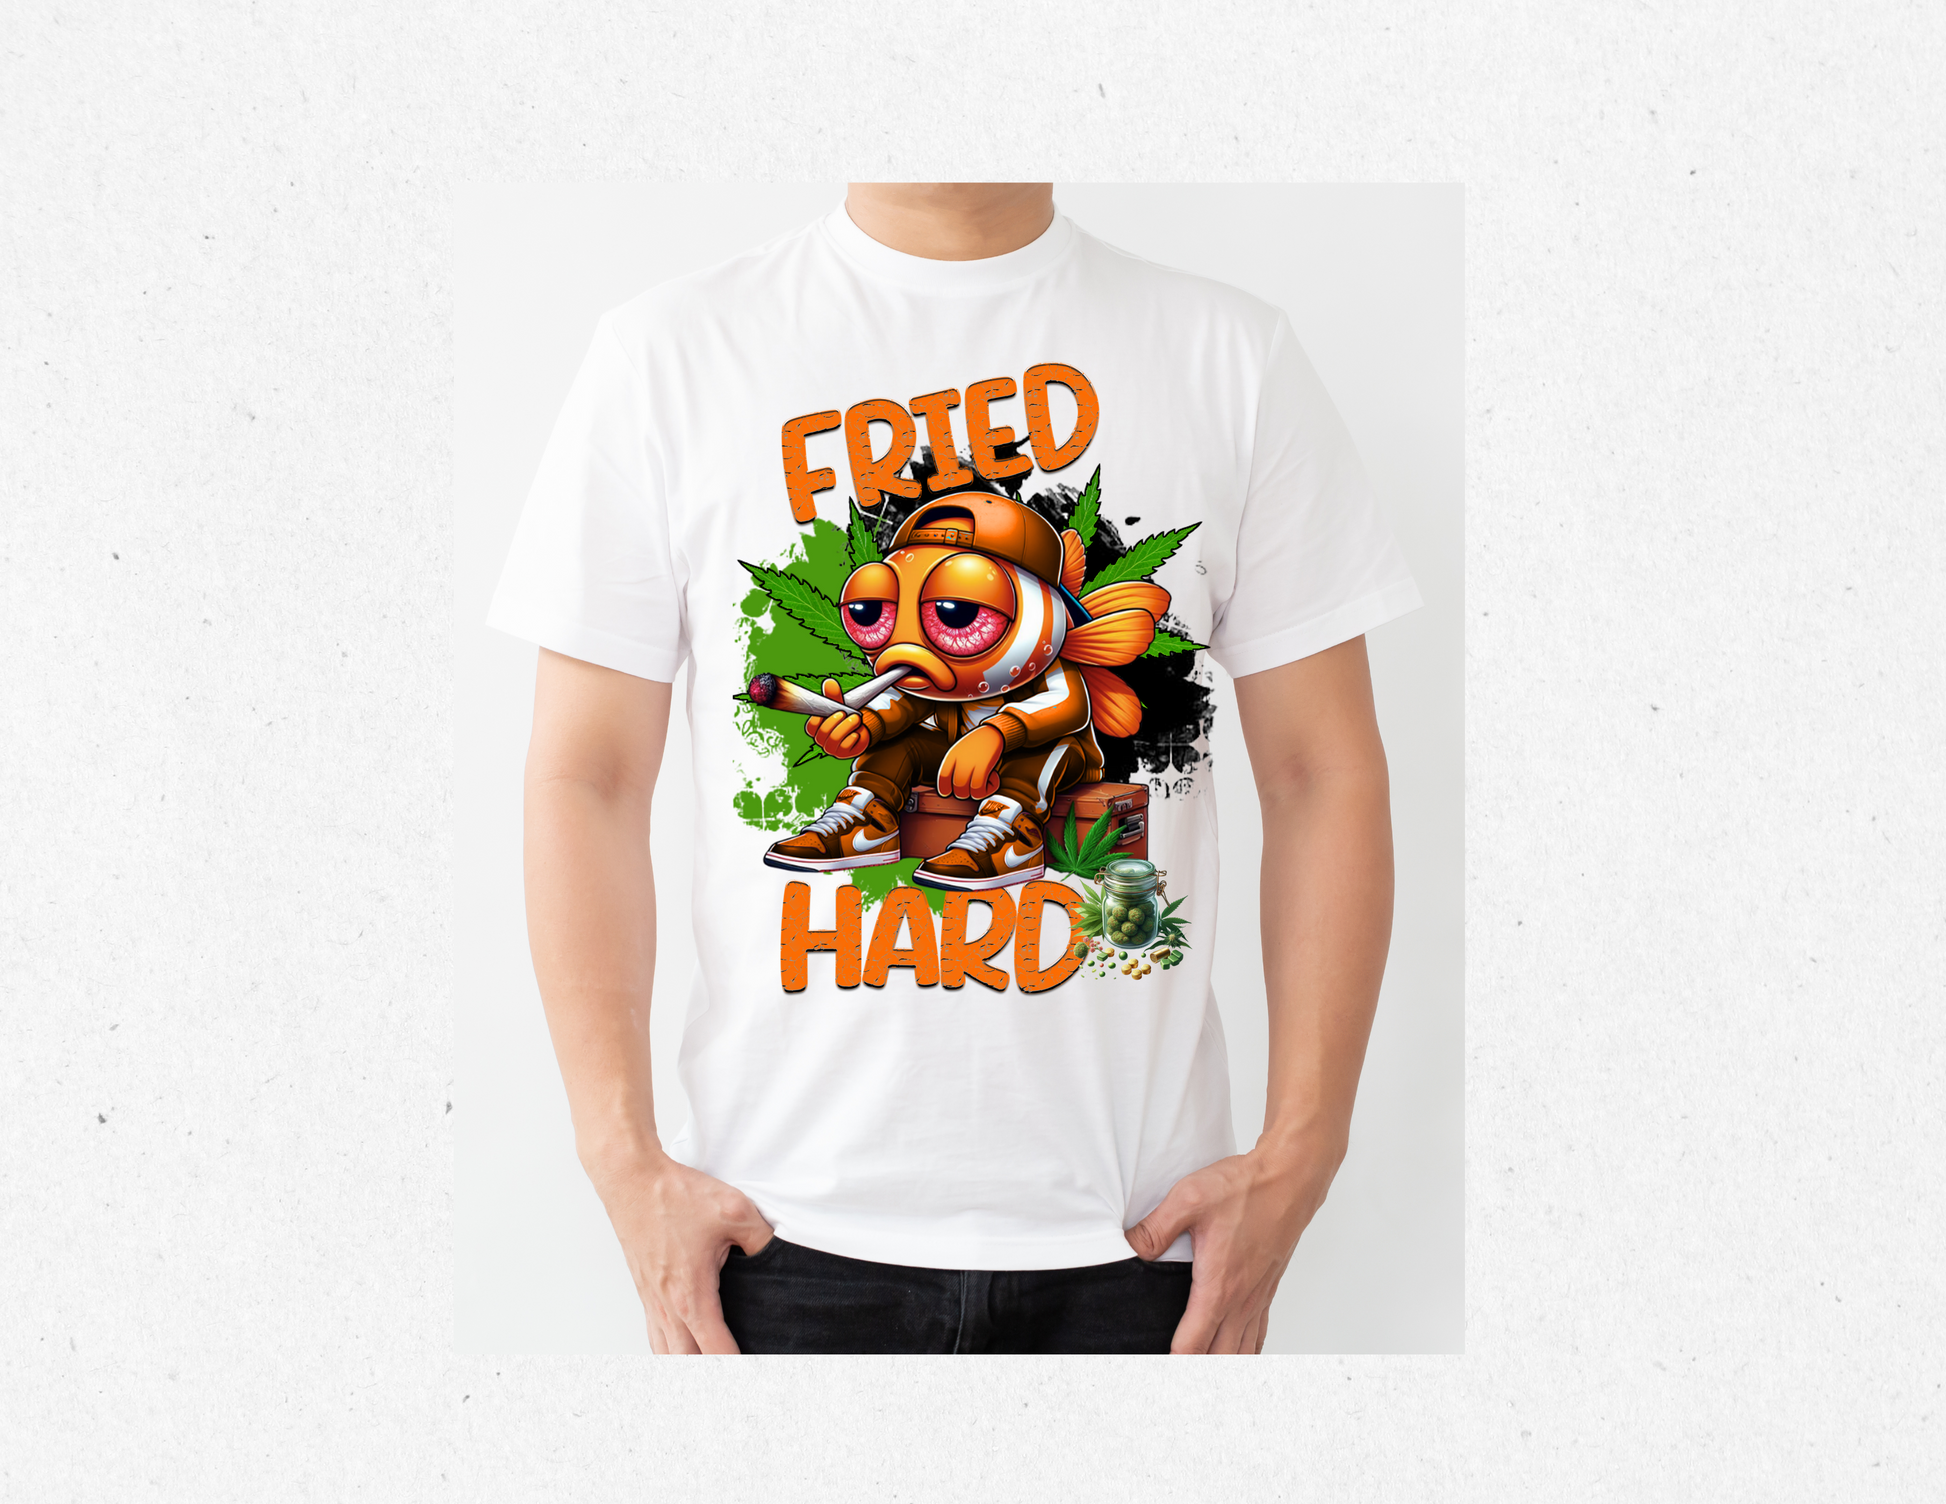 Baked, Fried, & Toasted shirts - Customizing the Chaos 